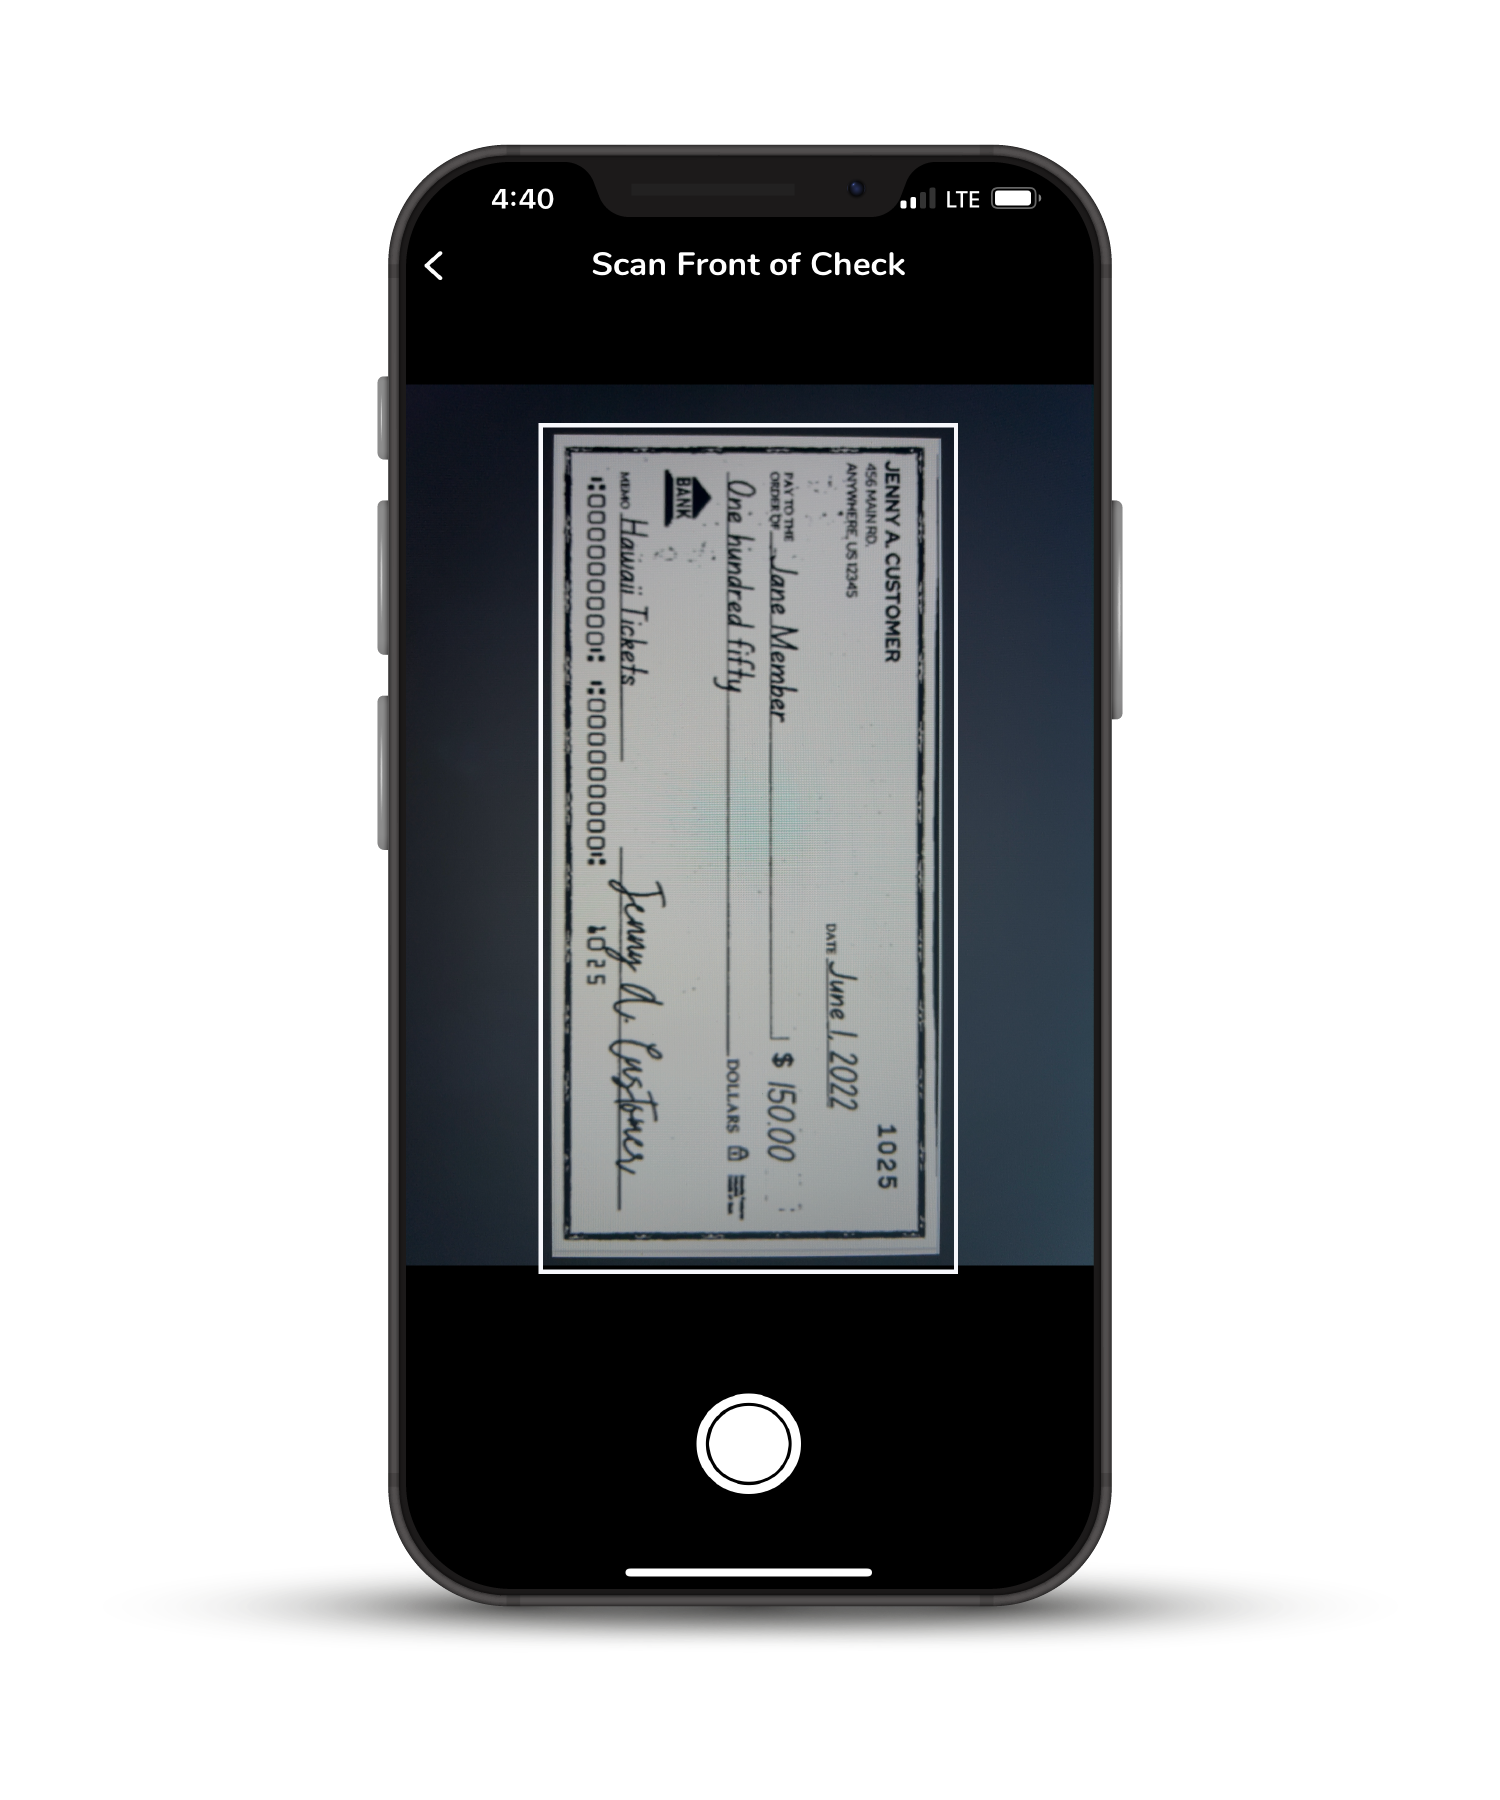 Make a mobile check deposit